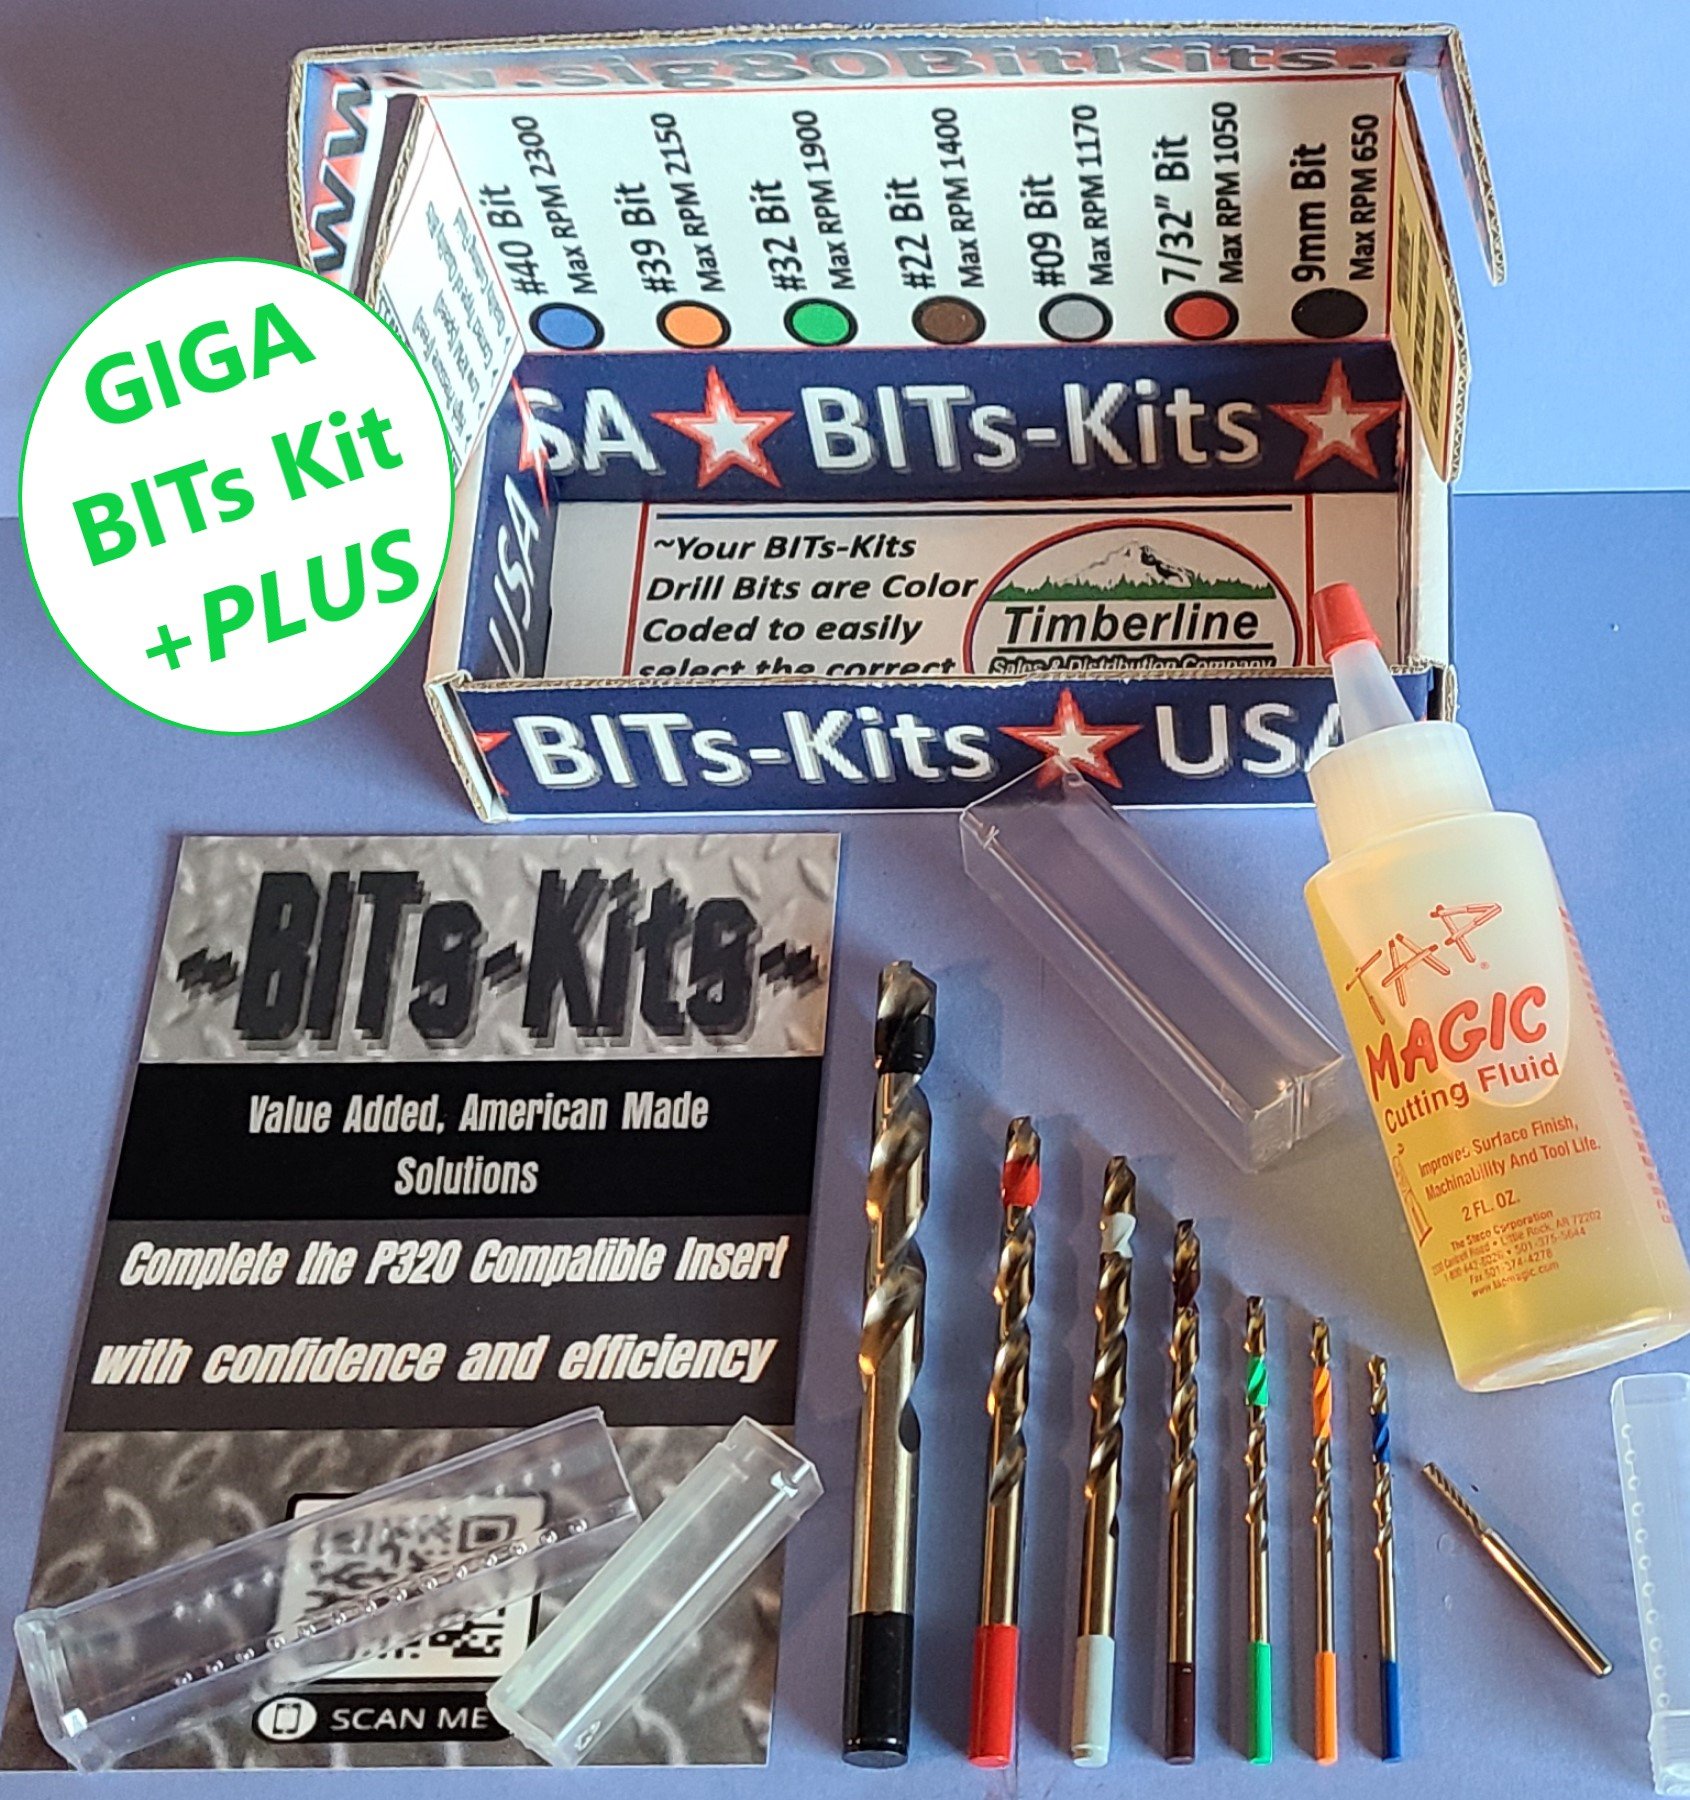 f1 GIGA BITs Kit +PLUS.jpg